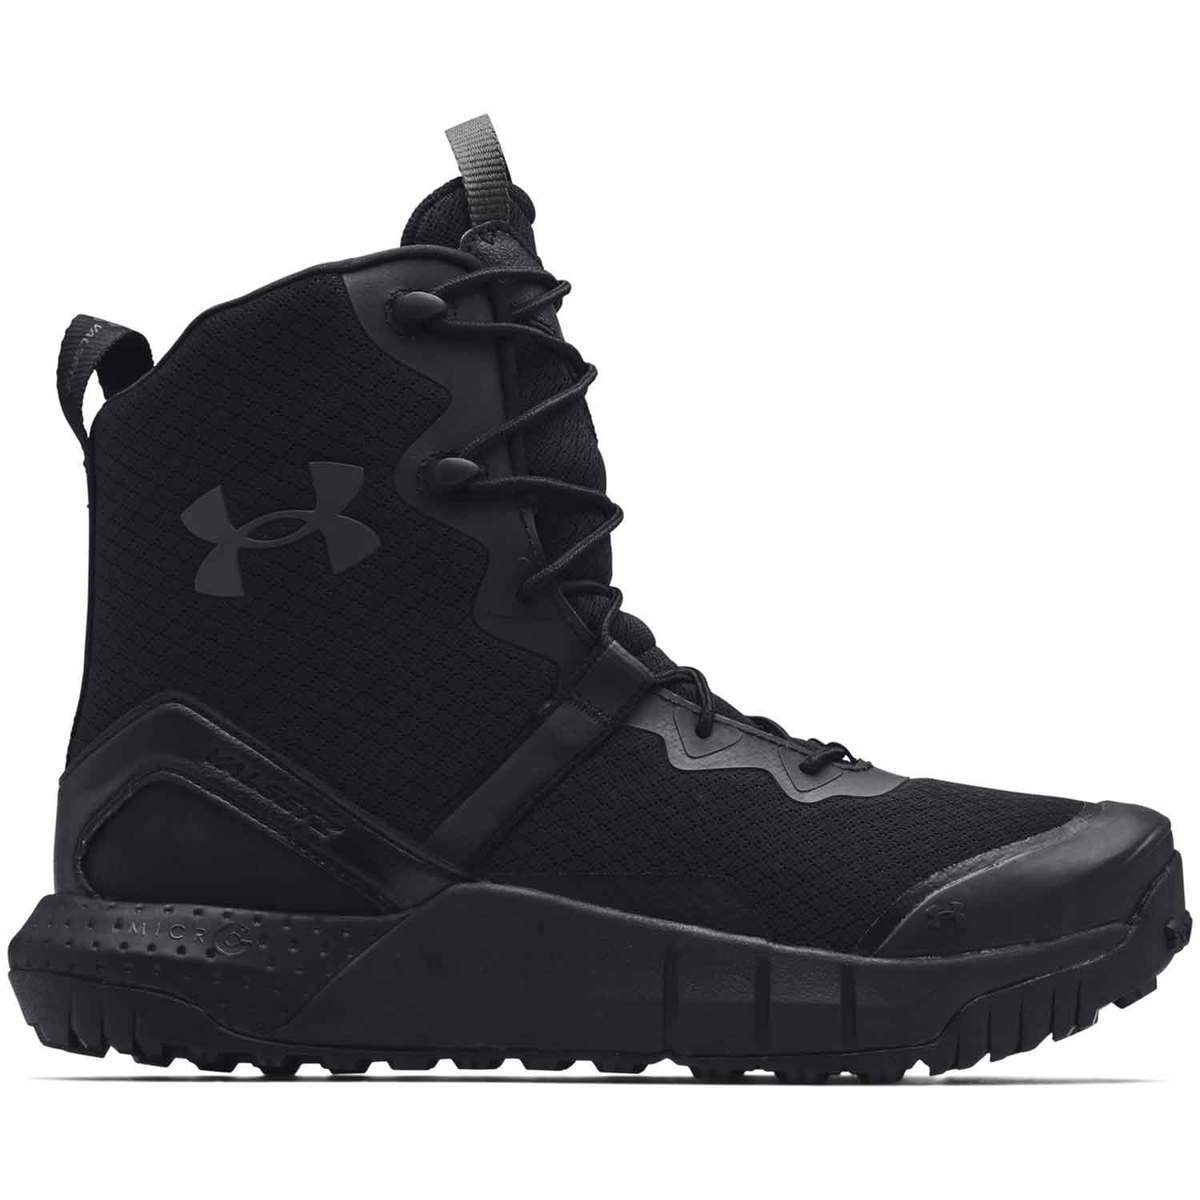 Under Armour Men's Micro G Valsetz Tactical Work Boots - Black - Size 8 ...